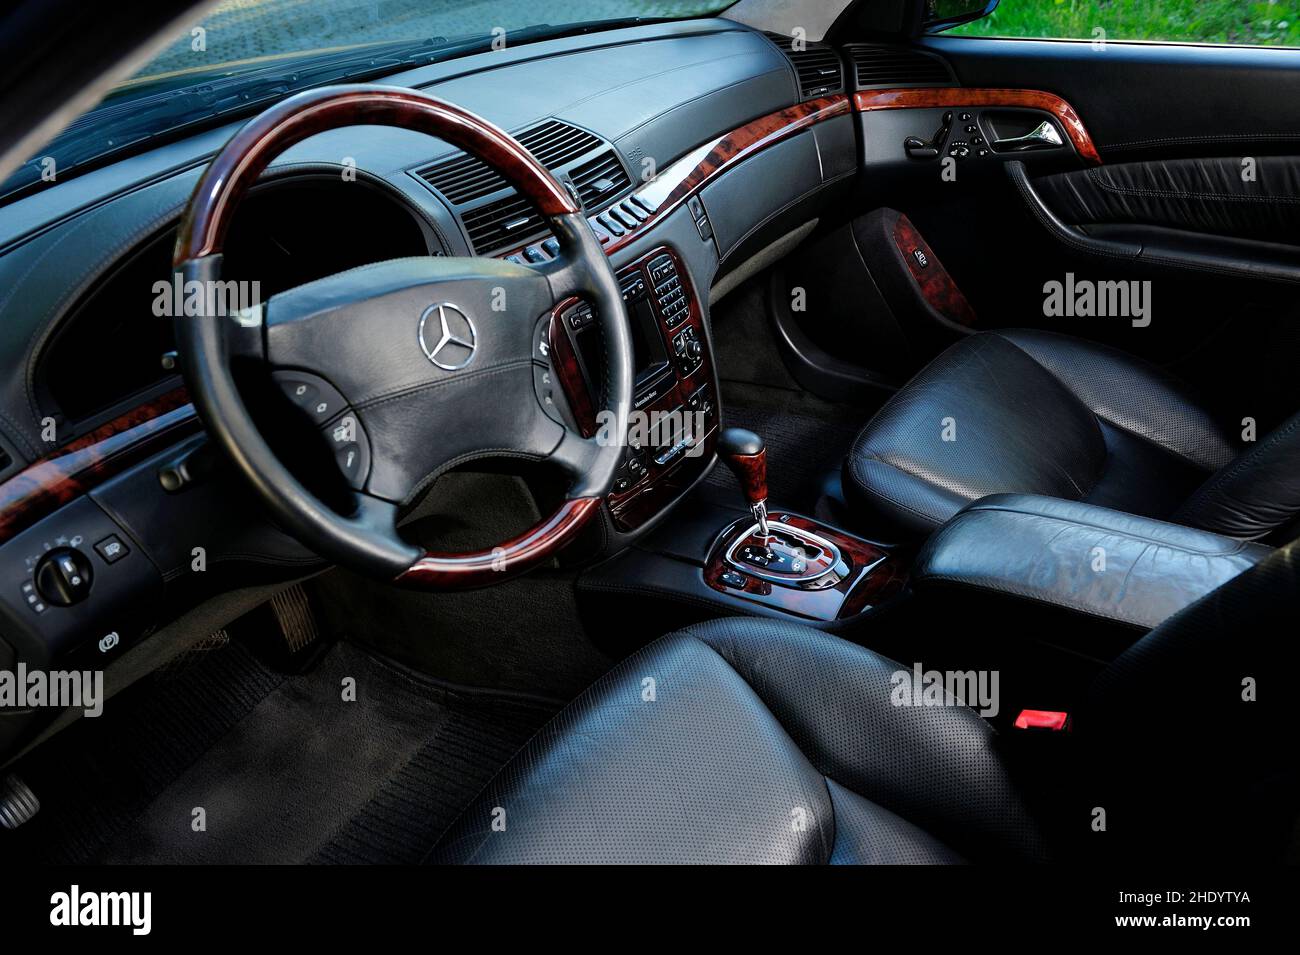 Mercedes -Benz S600 V12, lusso, stile di vita, auto, auto vip, foto Kazimierz Jurewicz Foto Stock